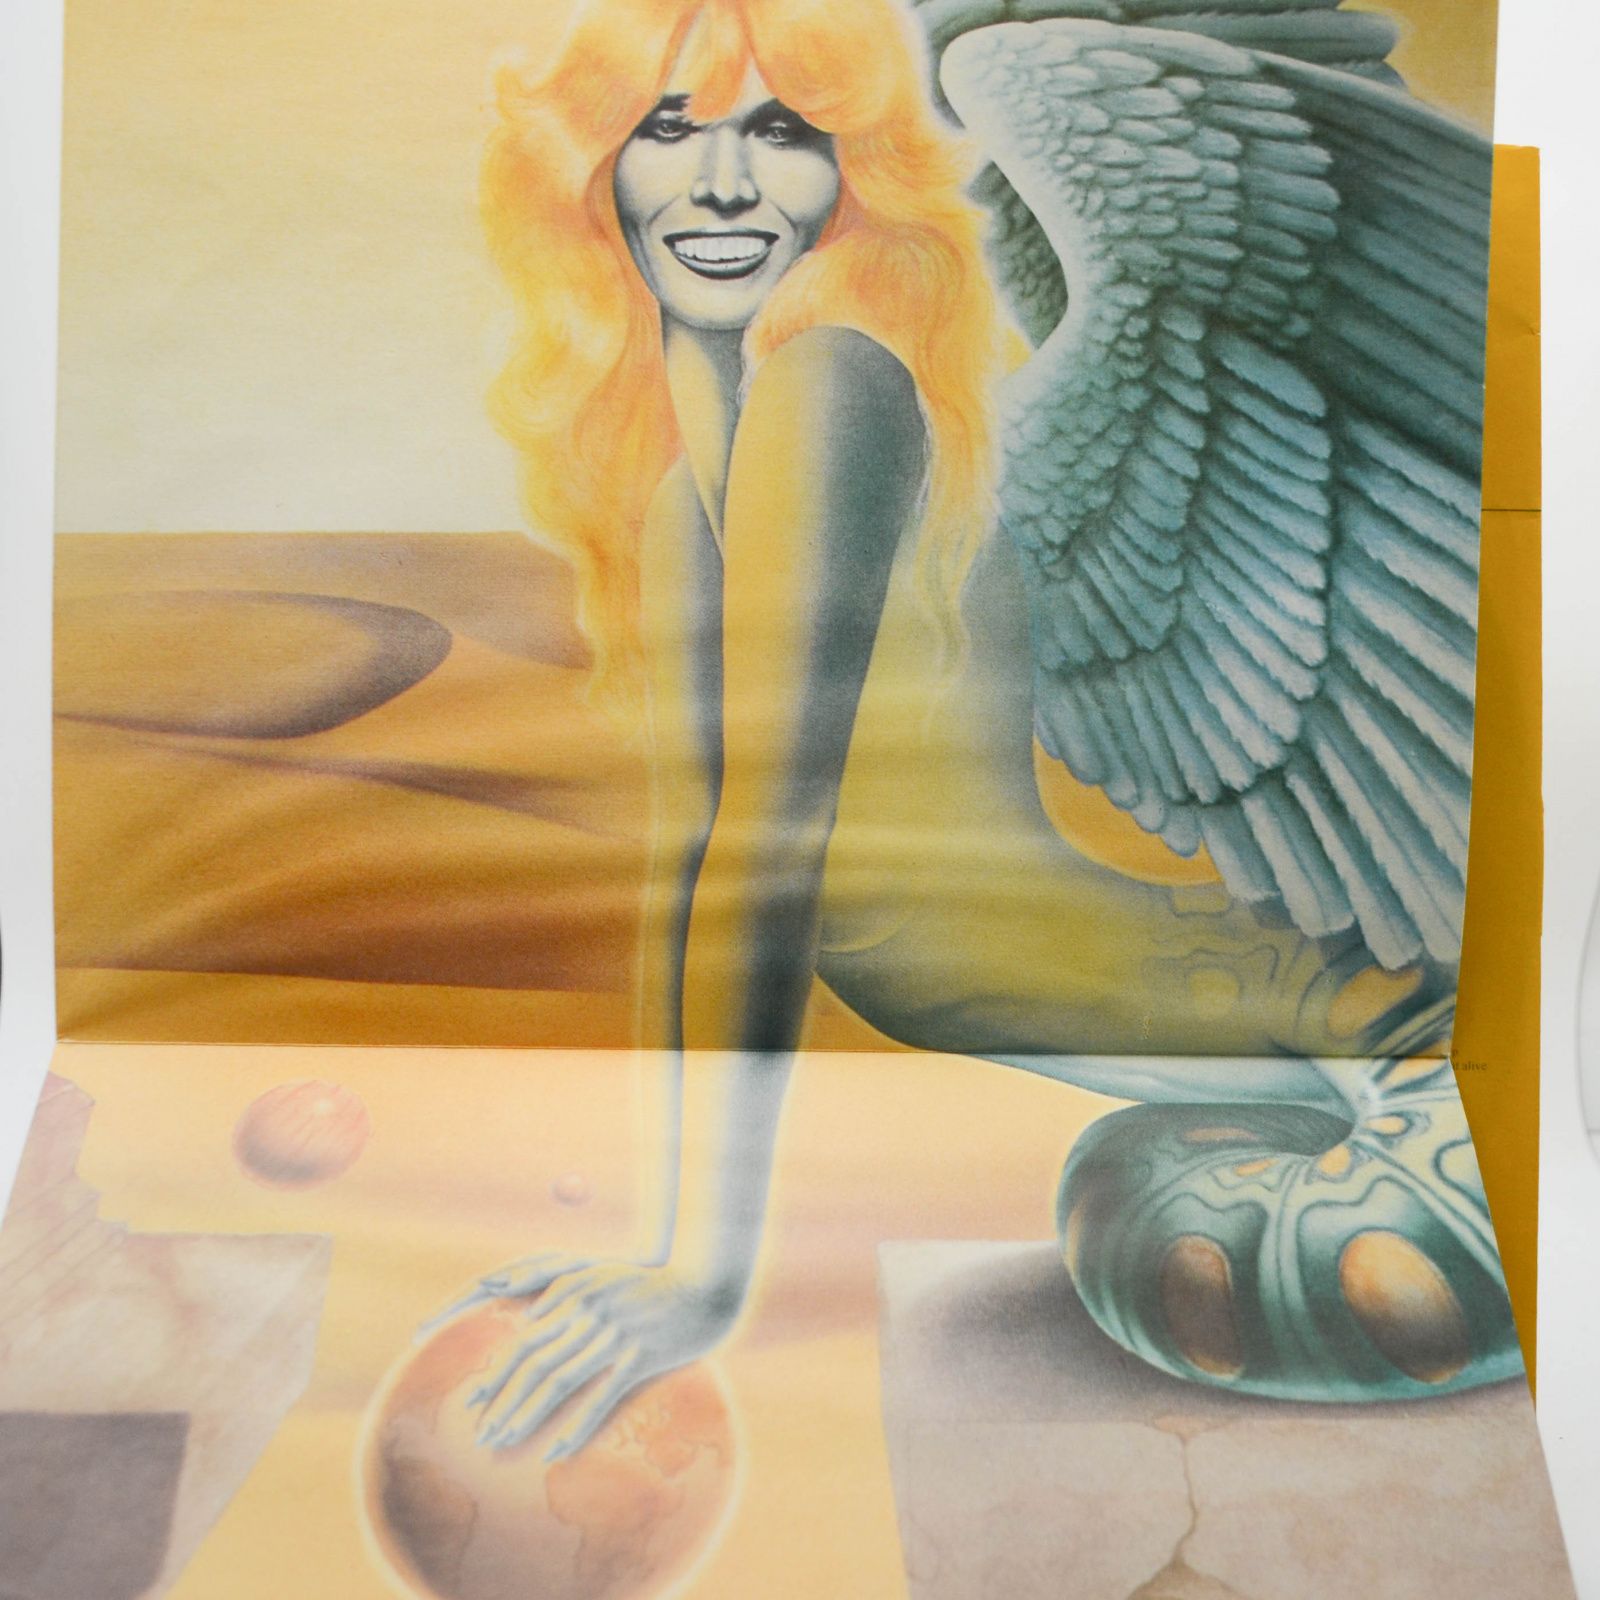 Amanda Lear — Never Trust A Pretty Face (poster), 1979